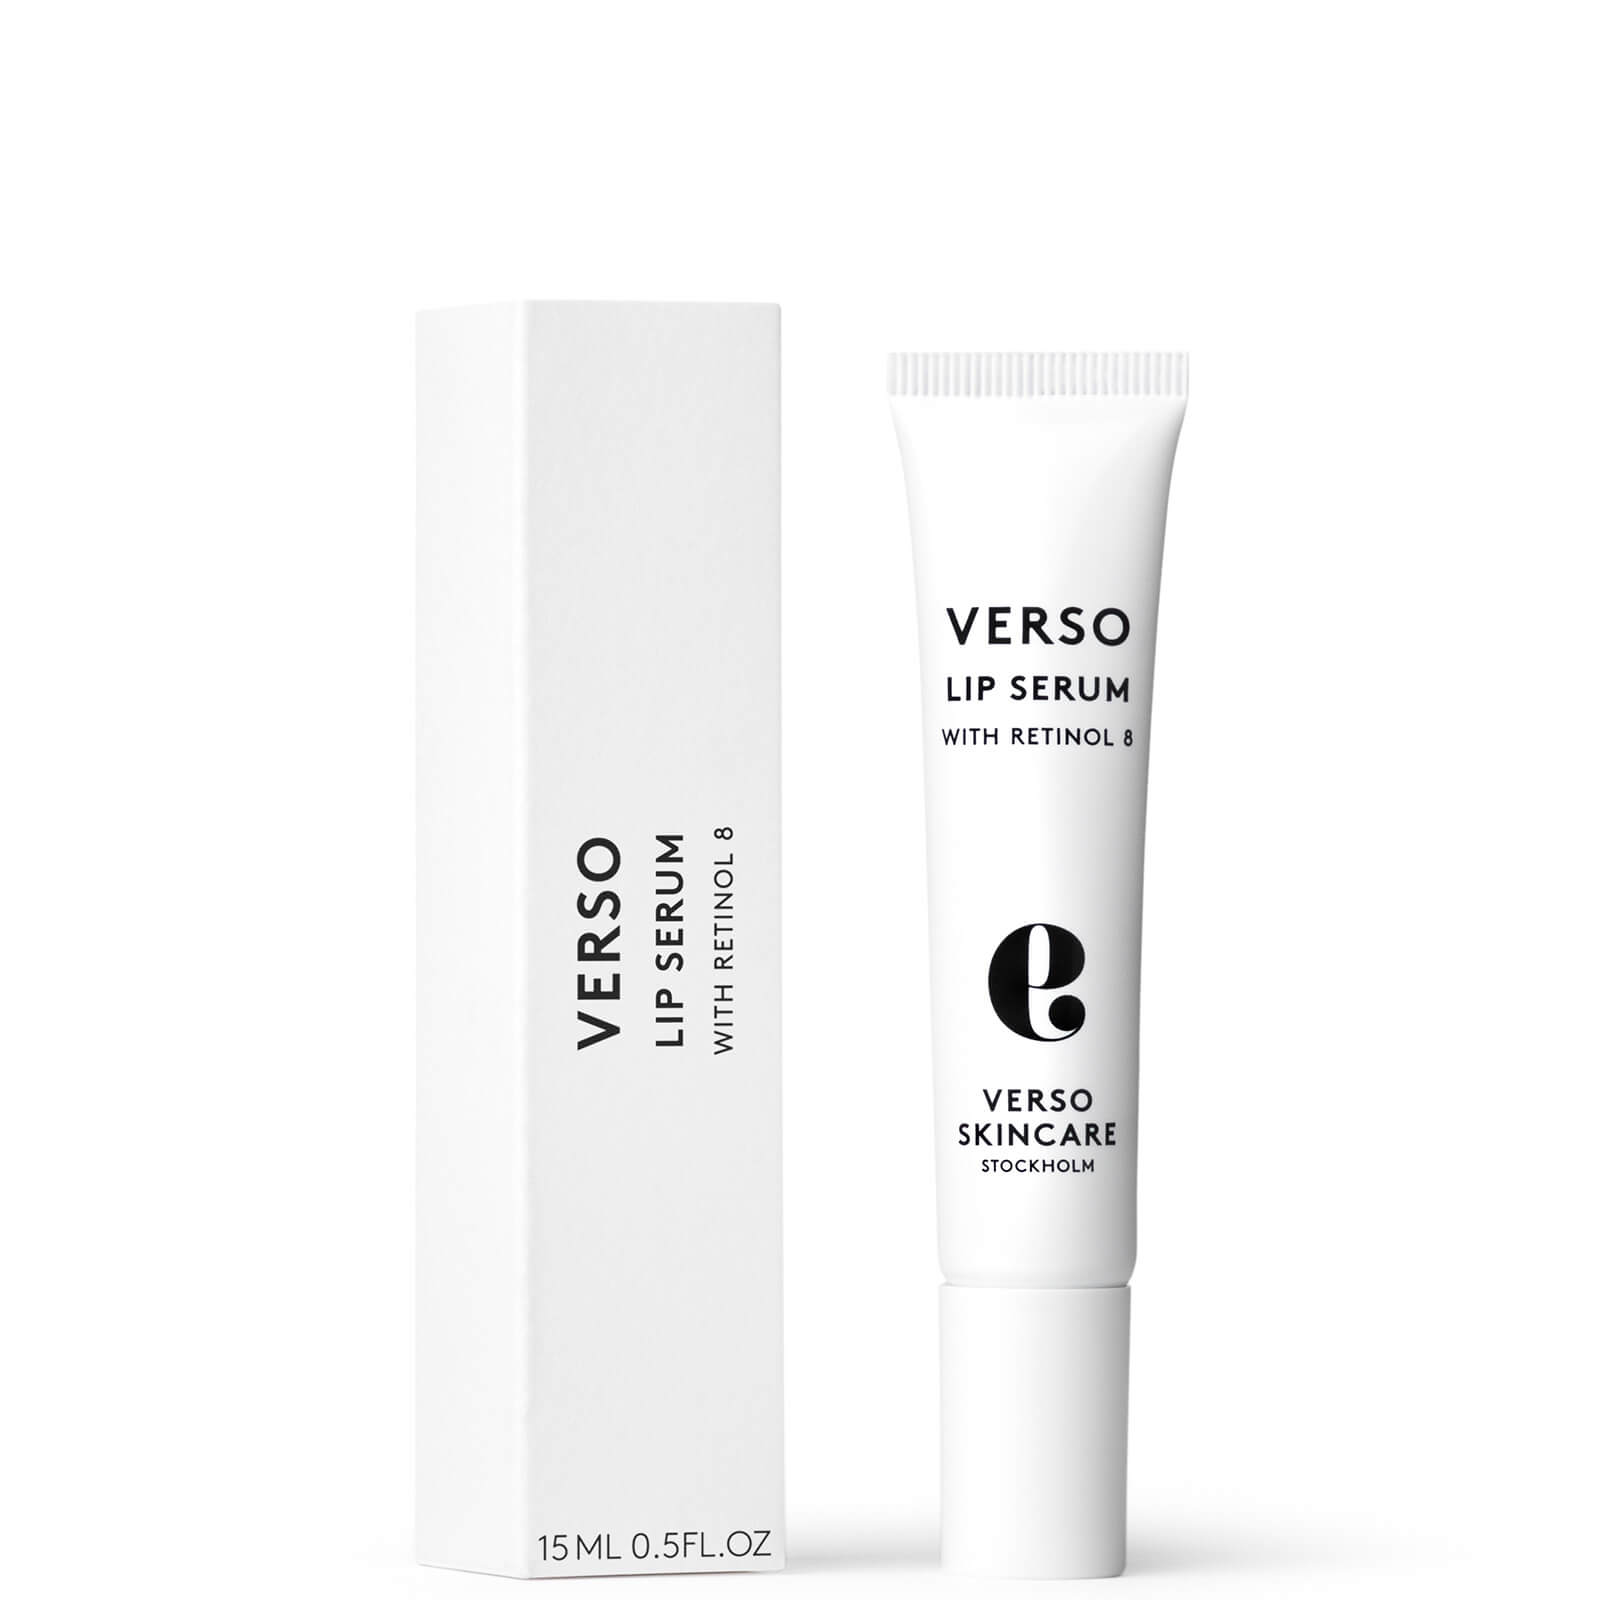 Verso Skincare Products - Daily Glow, Day Cream & Lip Serum